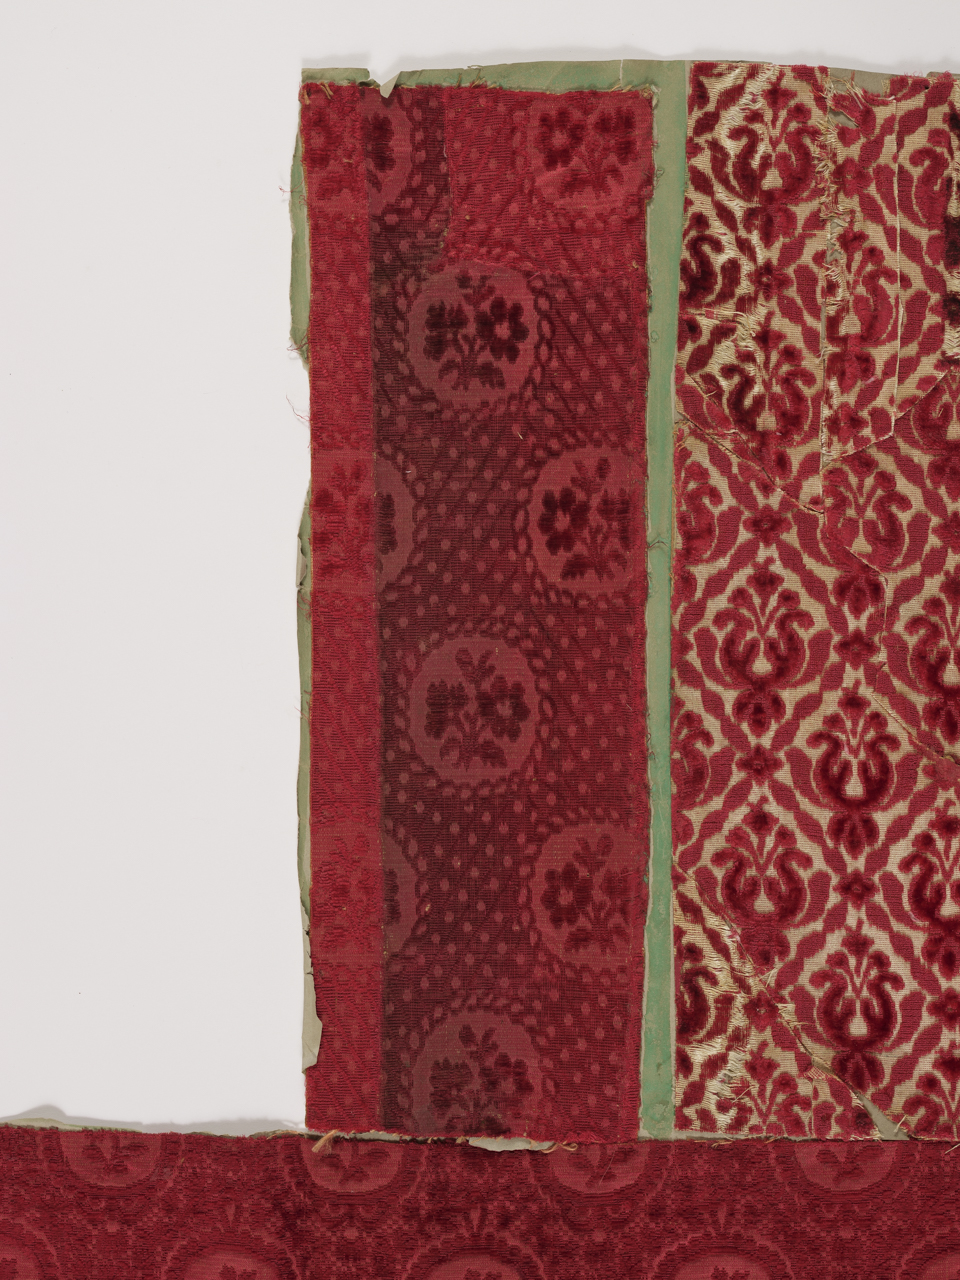 tessuto, frammento - manifattura italiana (fine/ metà XVIII-XIX)